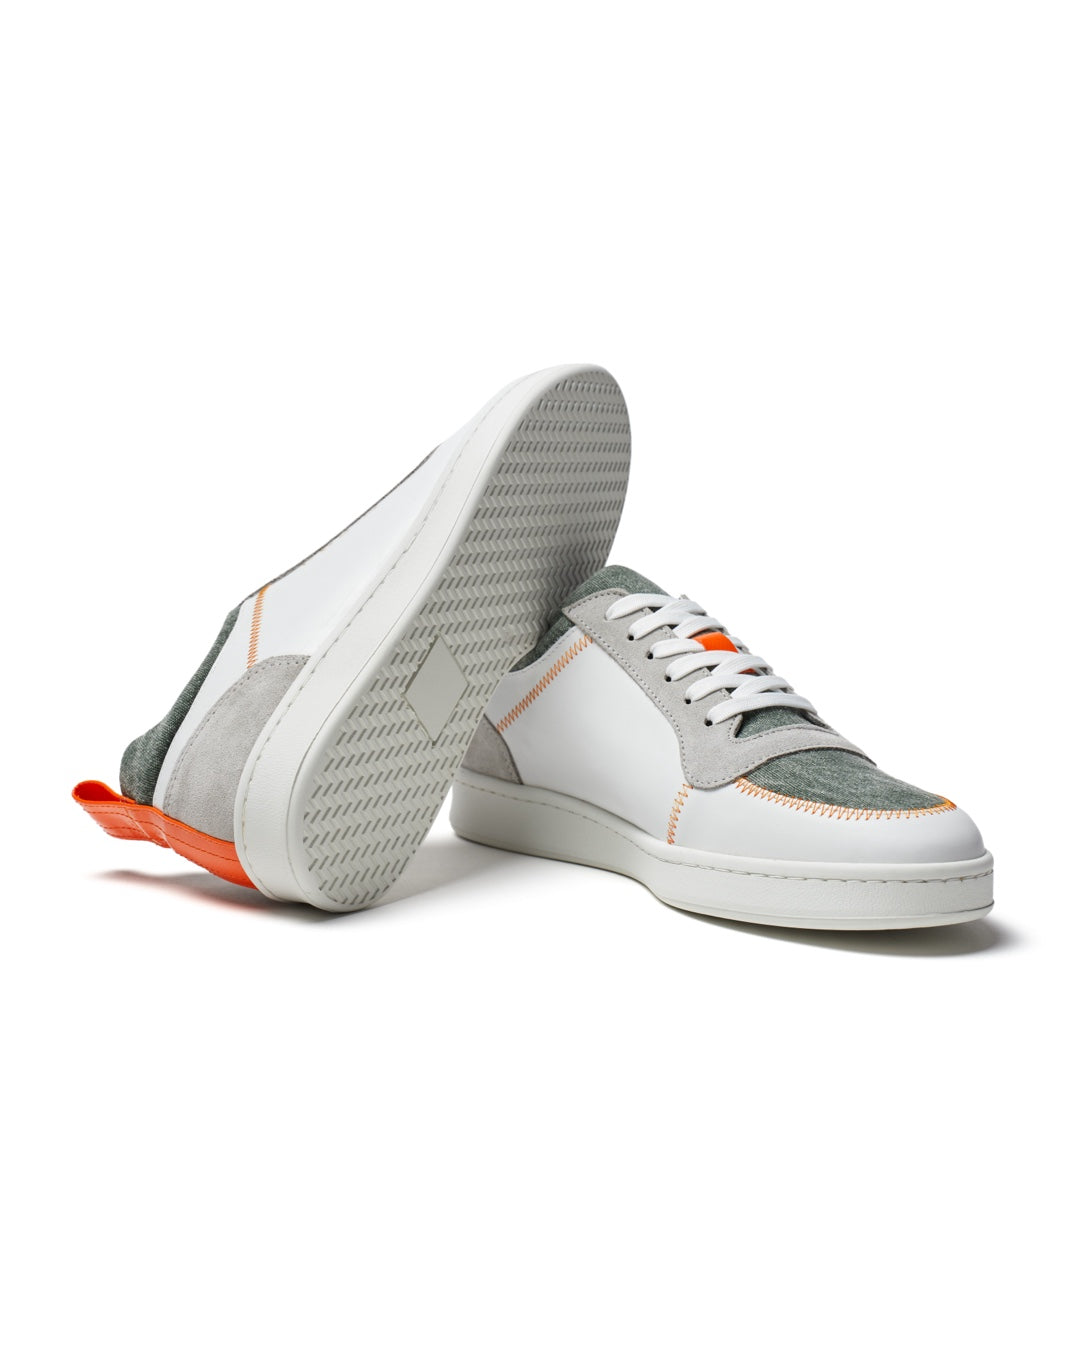 Dufour 2.0 Low Top Sneaker - F65.0